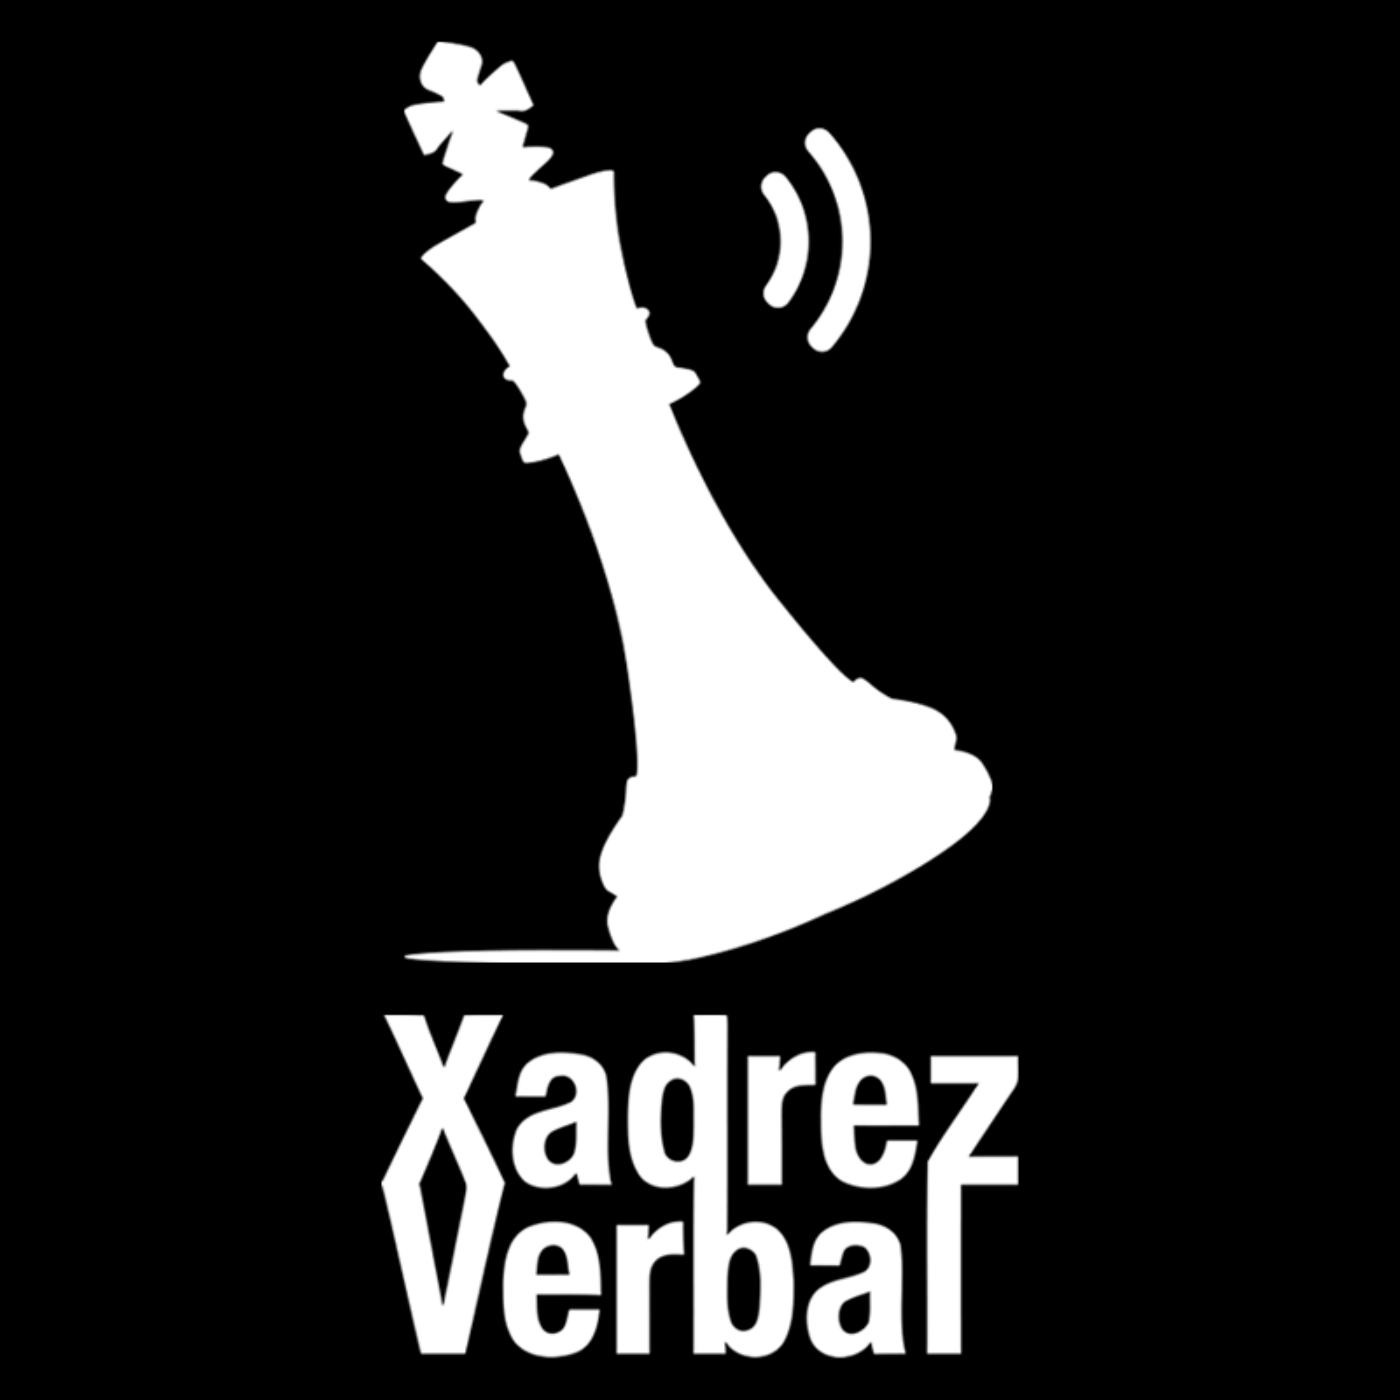 Xadrez Verbal - Oficial - playlist by Matias Pinto